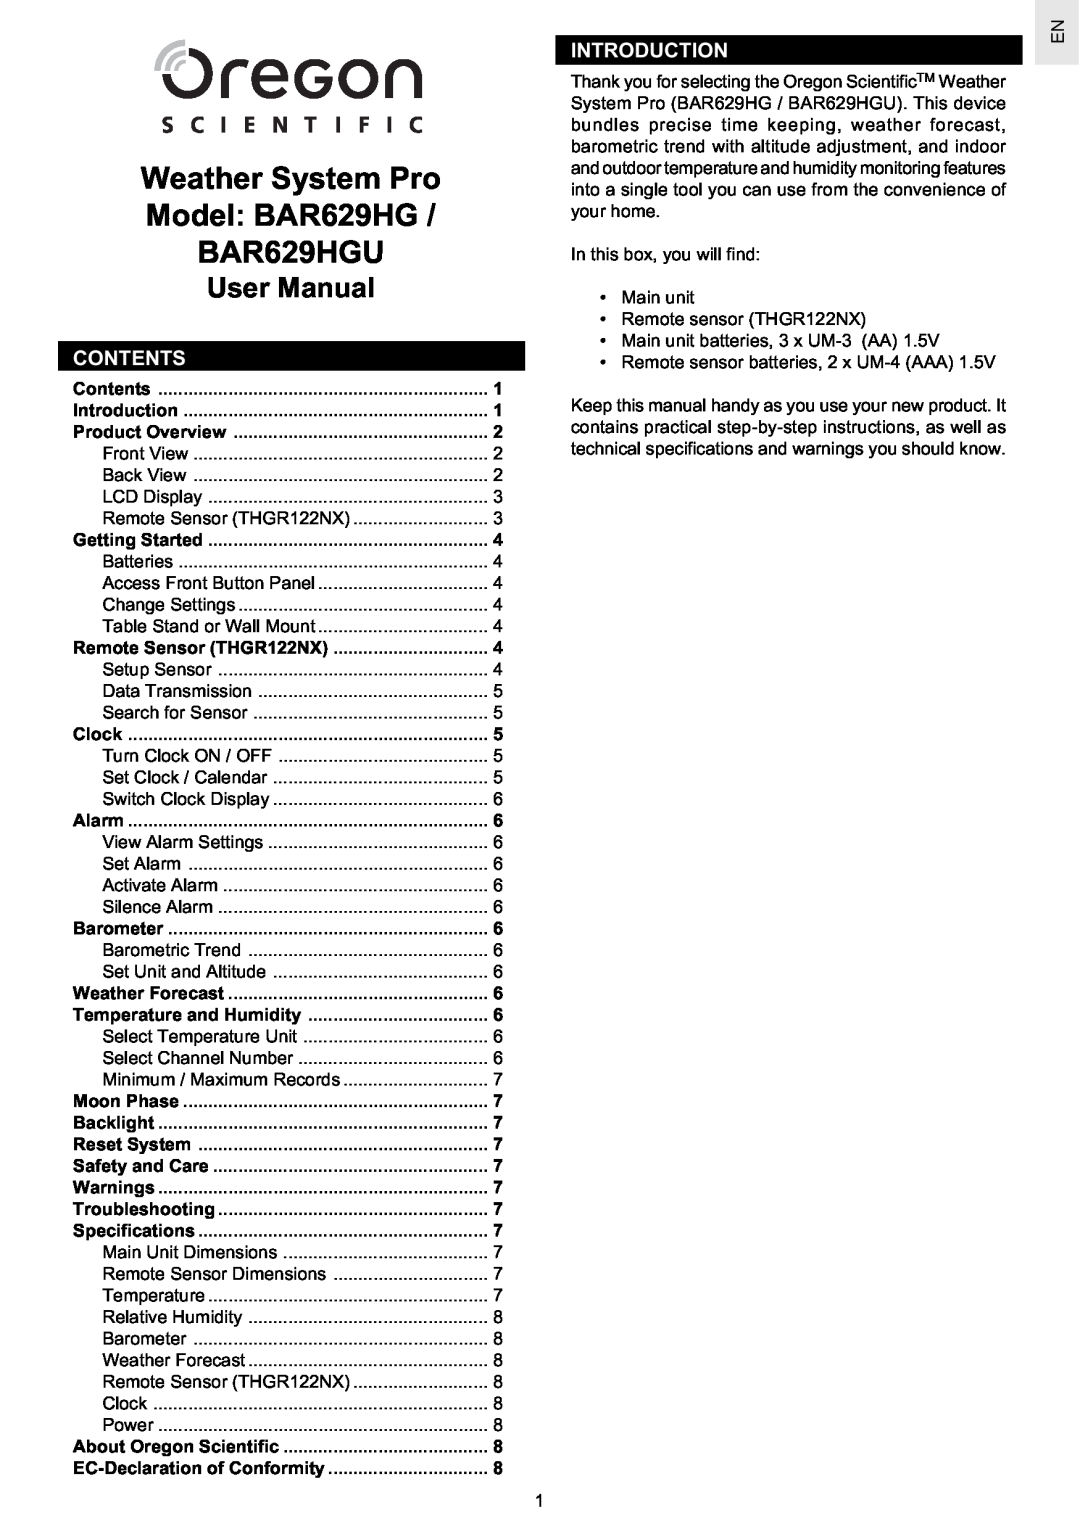 Oregon Scientific user manual Weather System Pro, Model BAR629HG, Contents, Introduction, BAR629HGU 